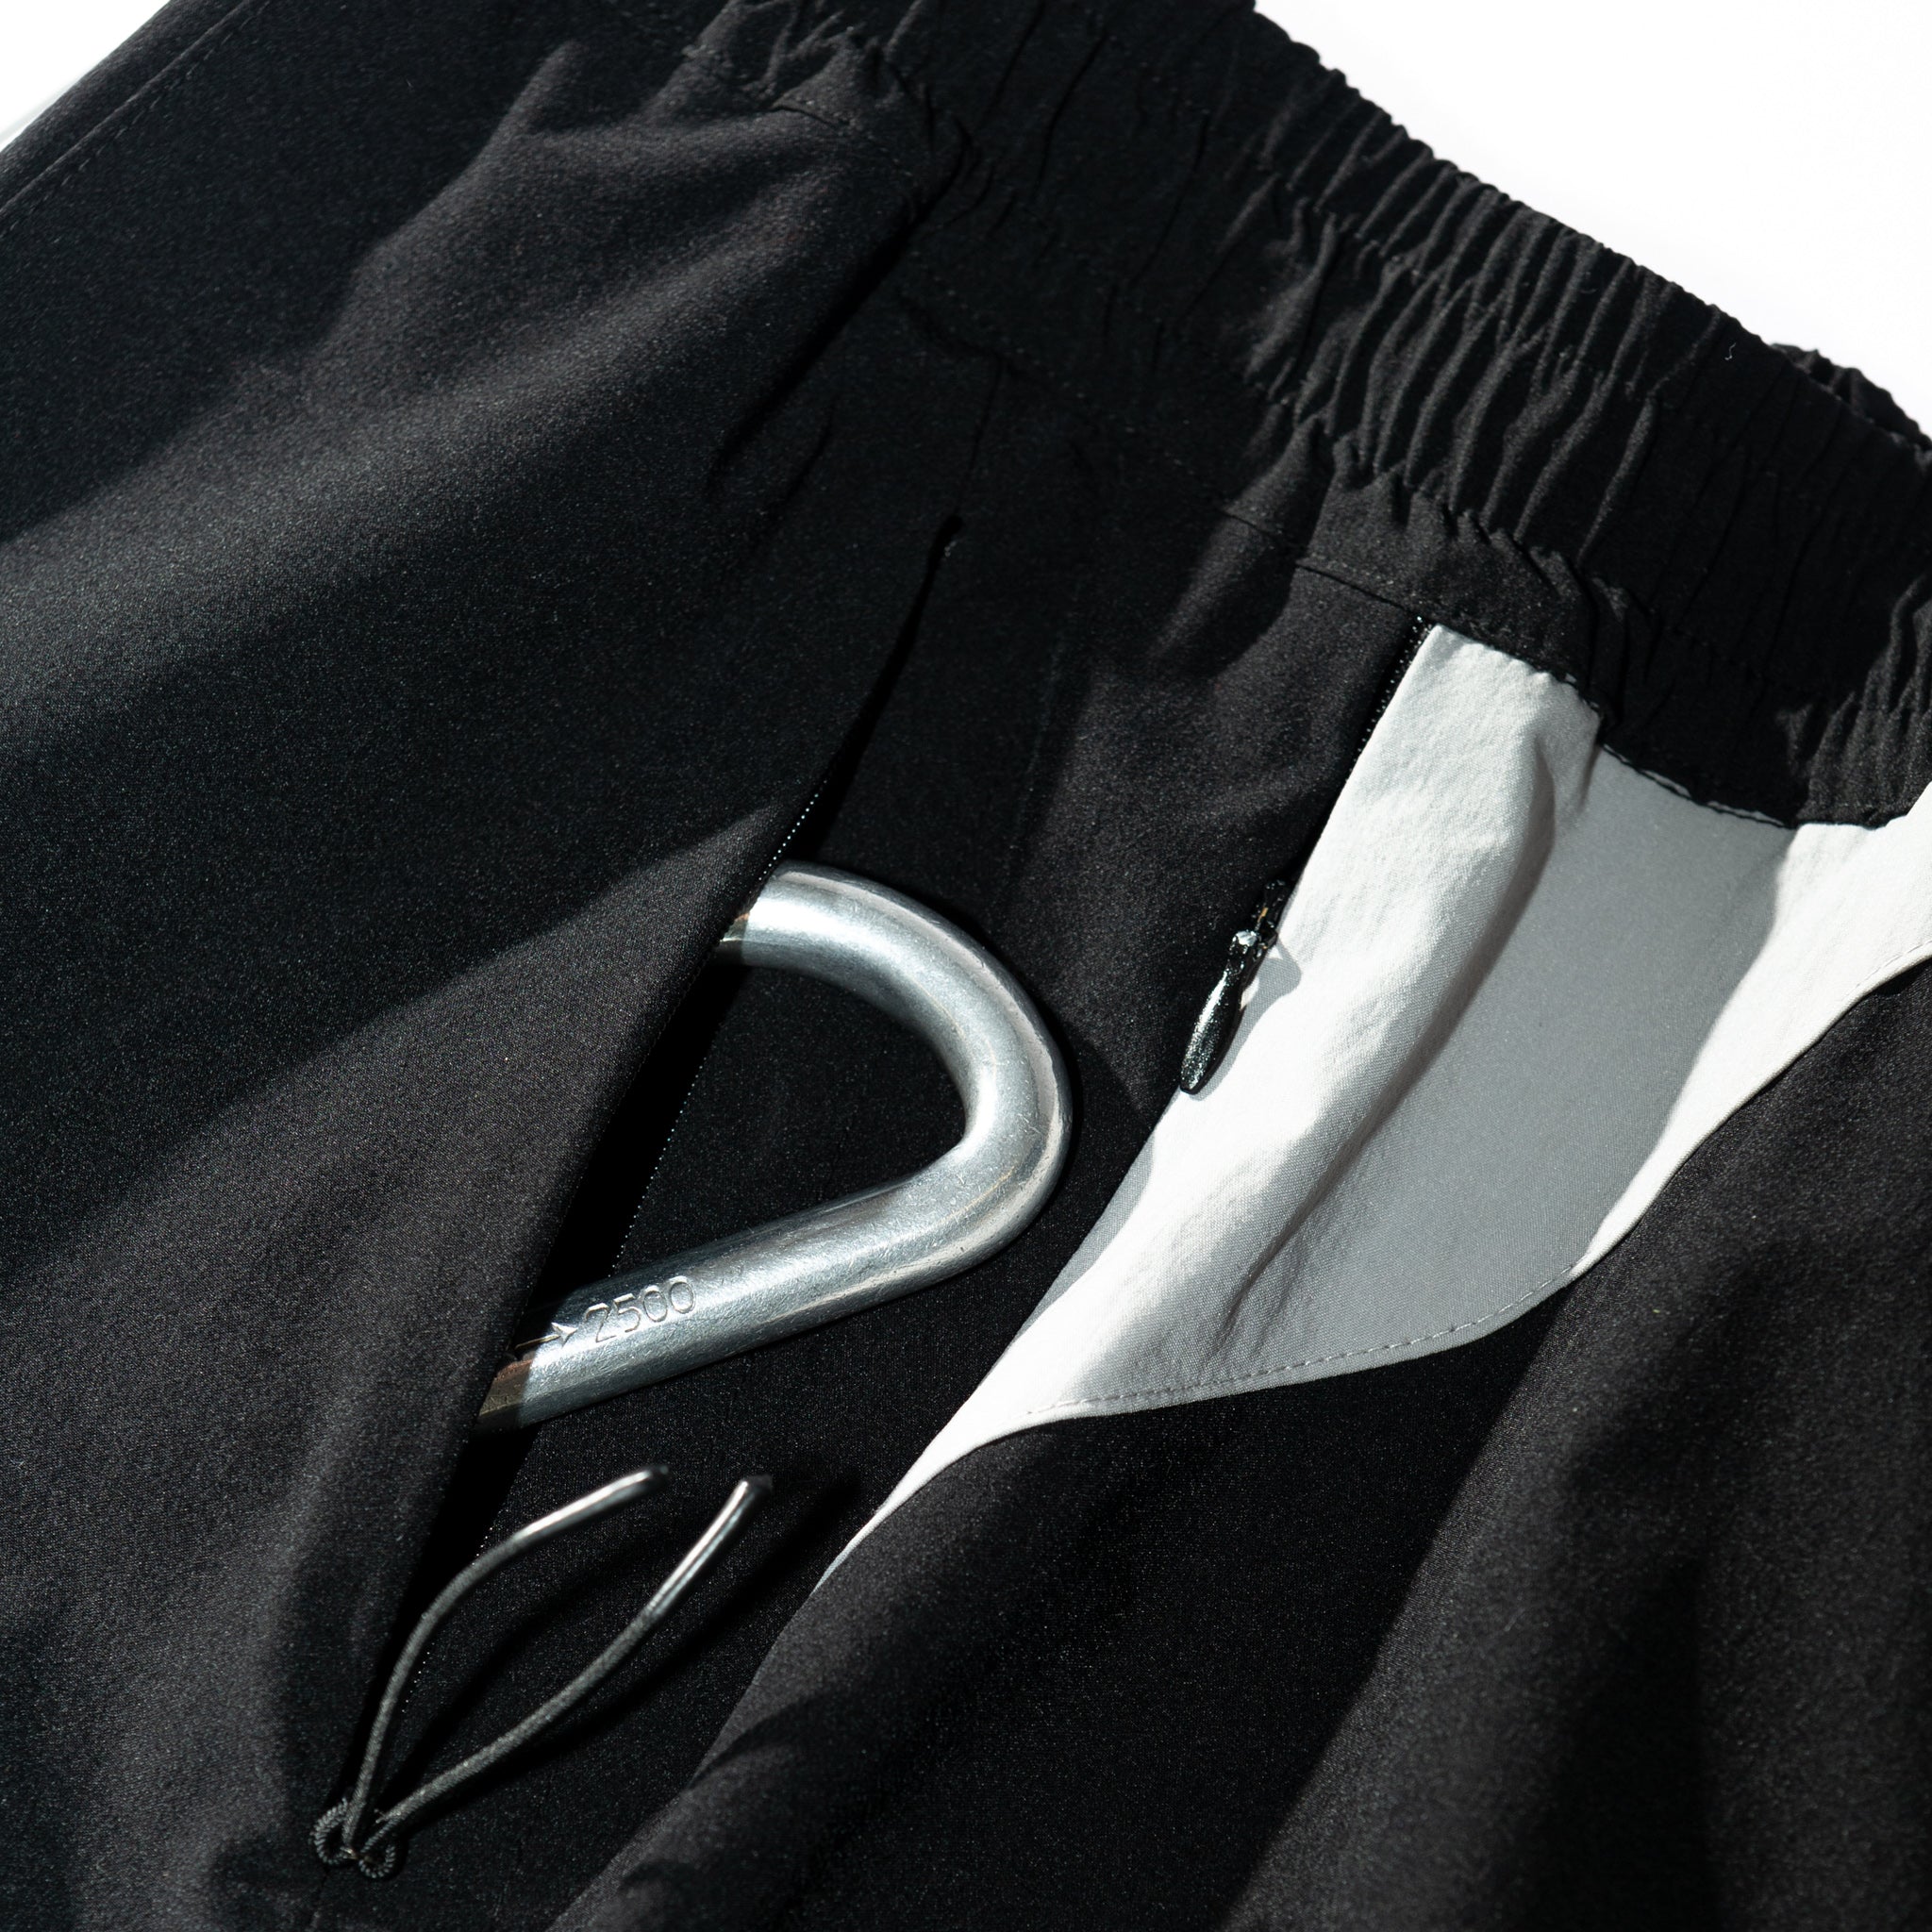 Ray Tech Cargo Shorts (Black/Grey)